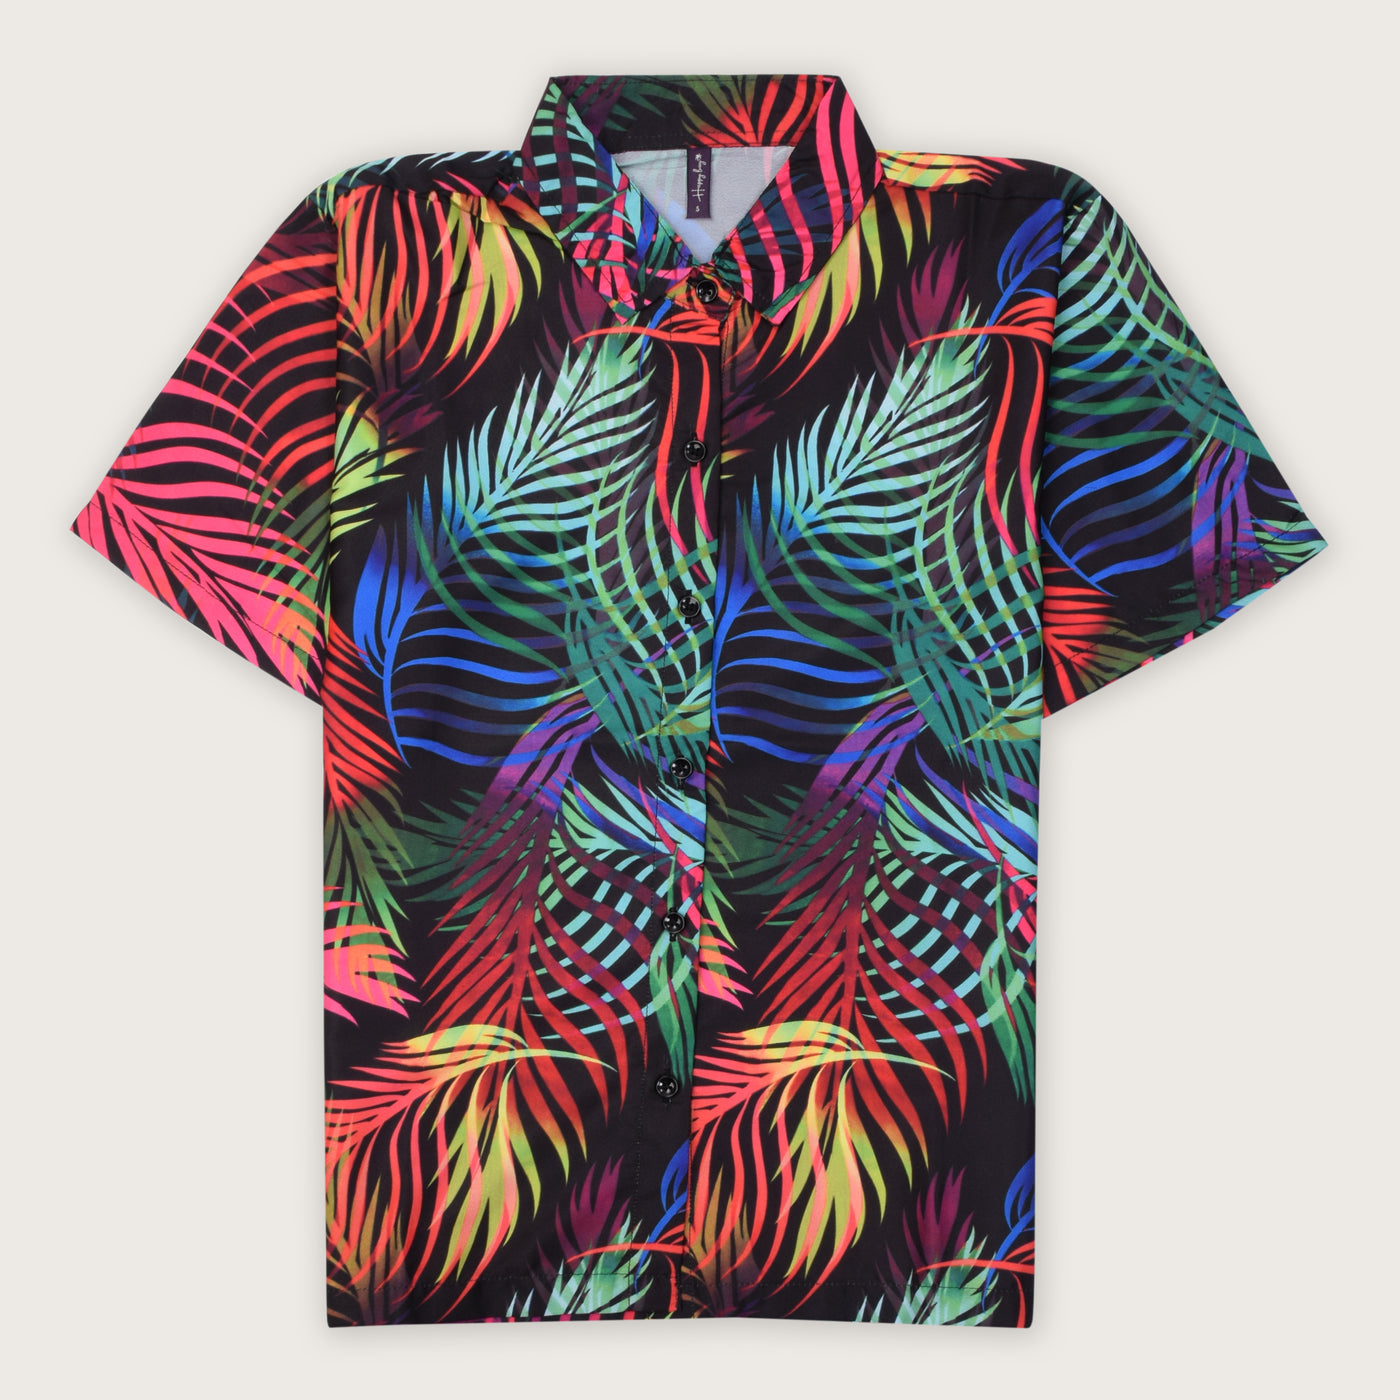 Buy now chrome glow hawaiian shirt